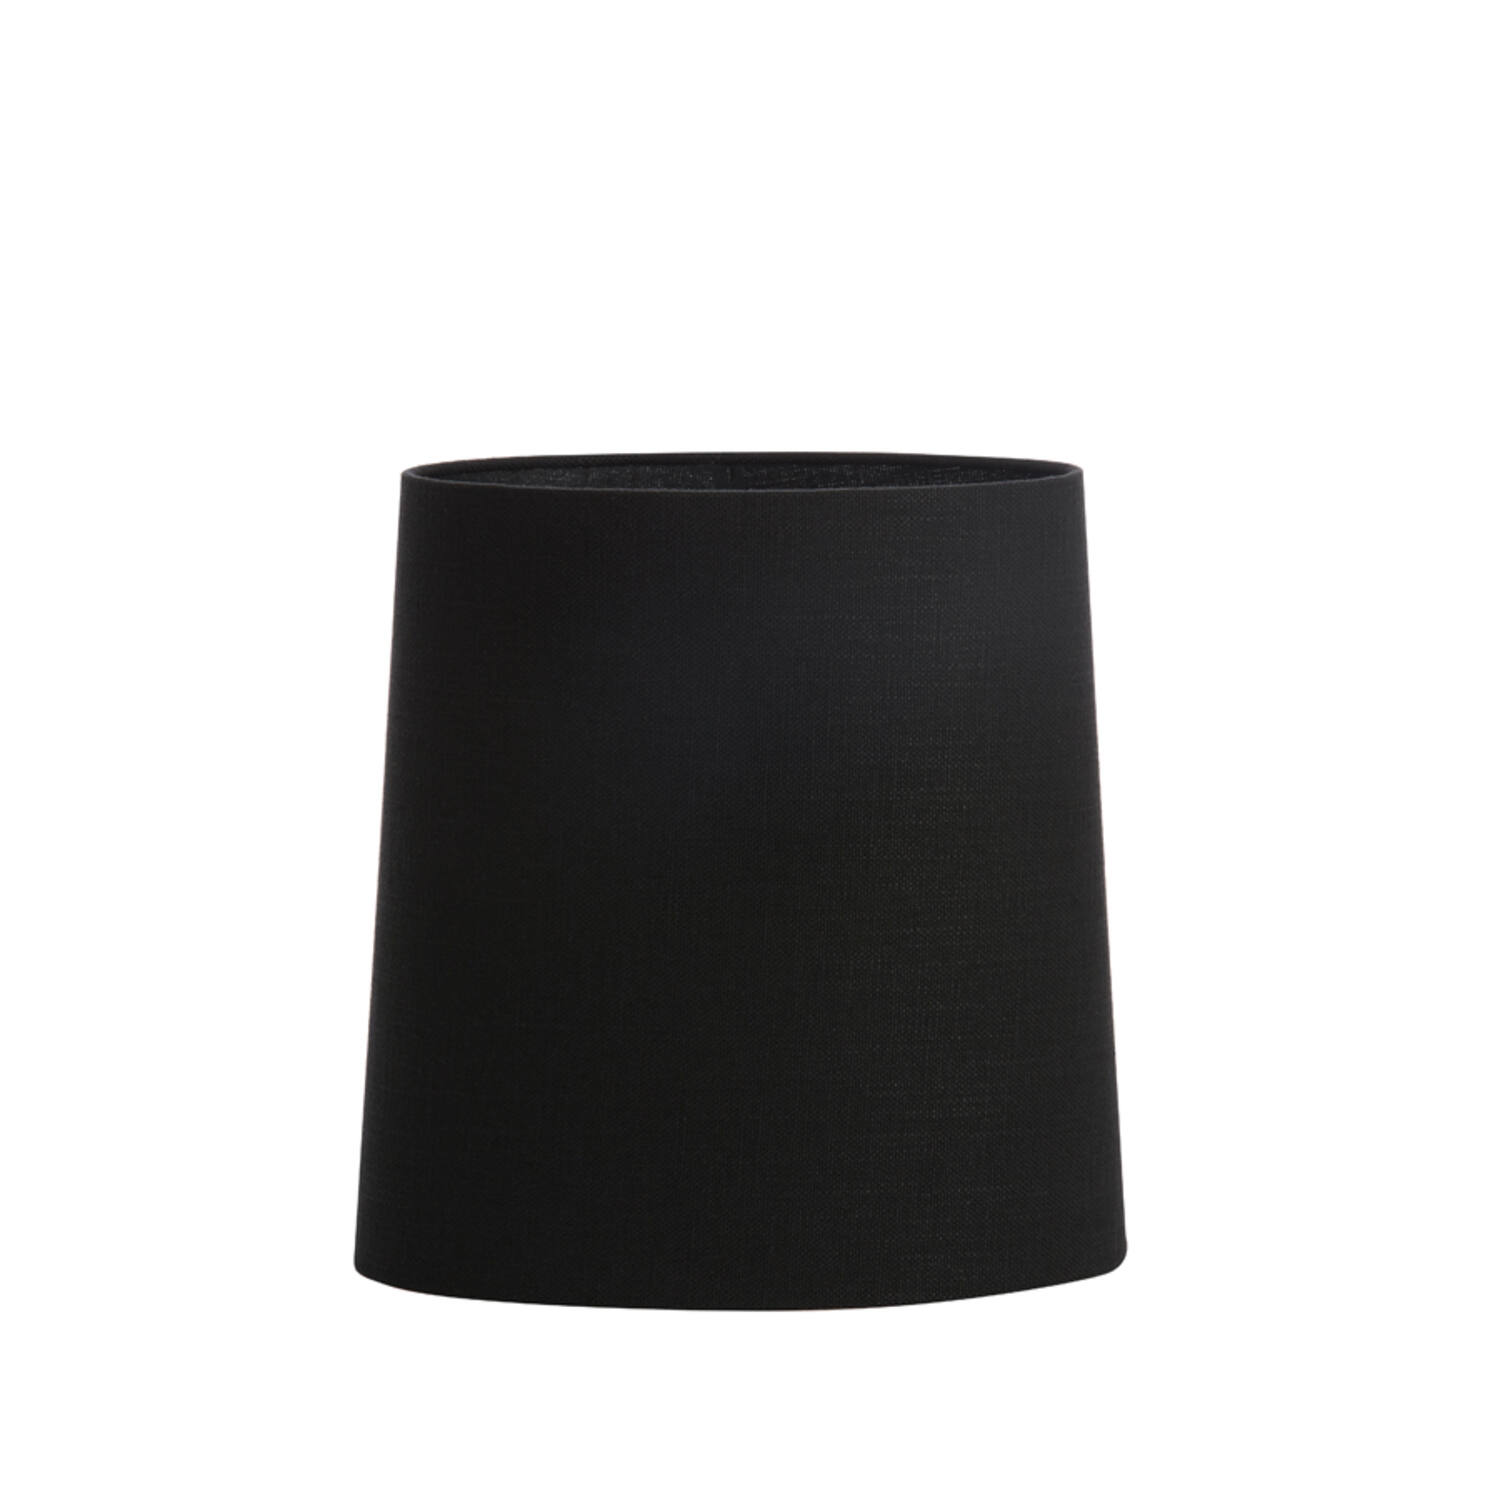 Shade ellips slim high 35-30-36 cm LIVIGNO black